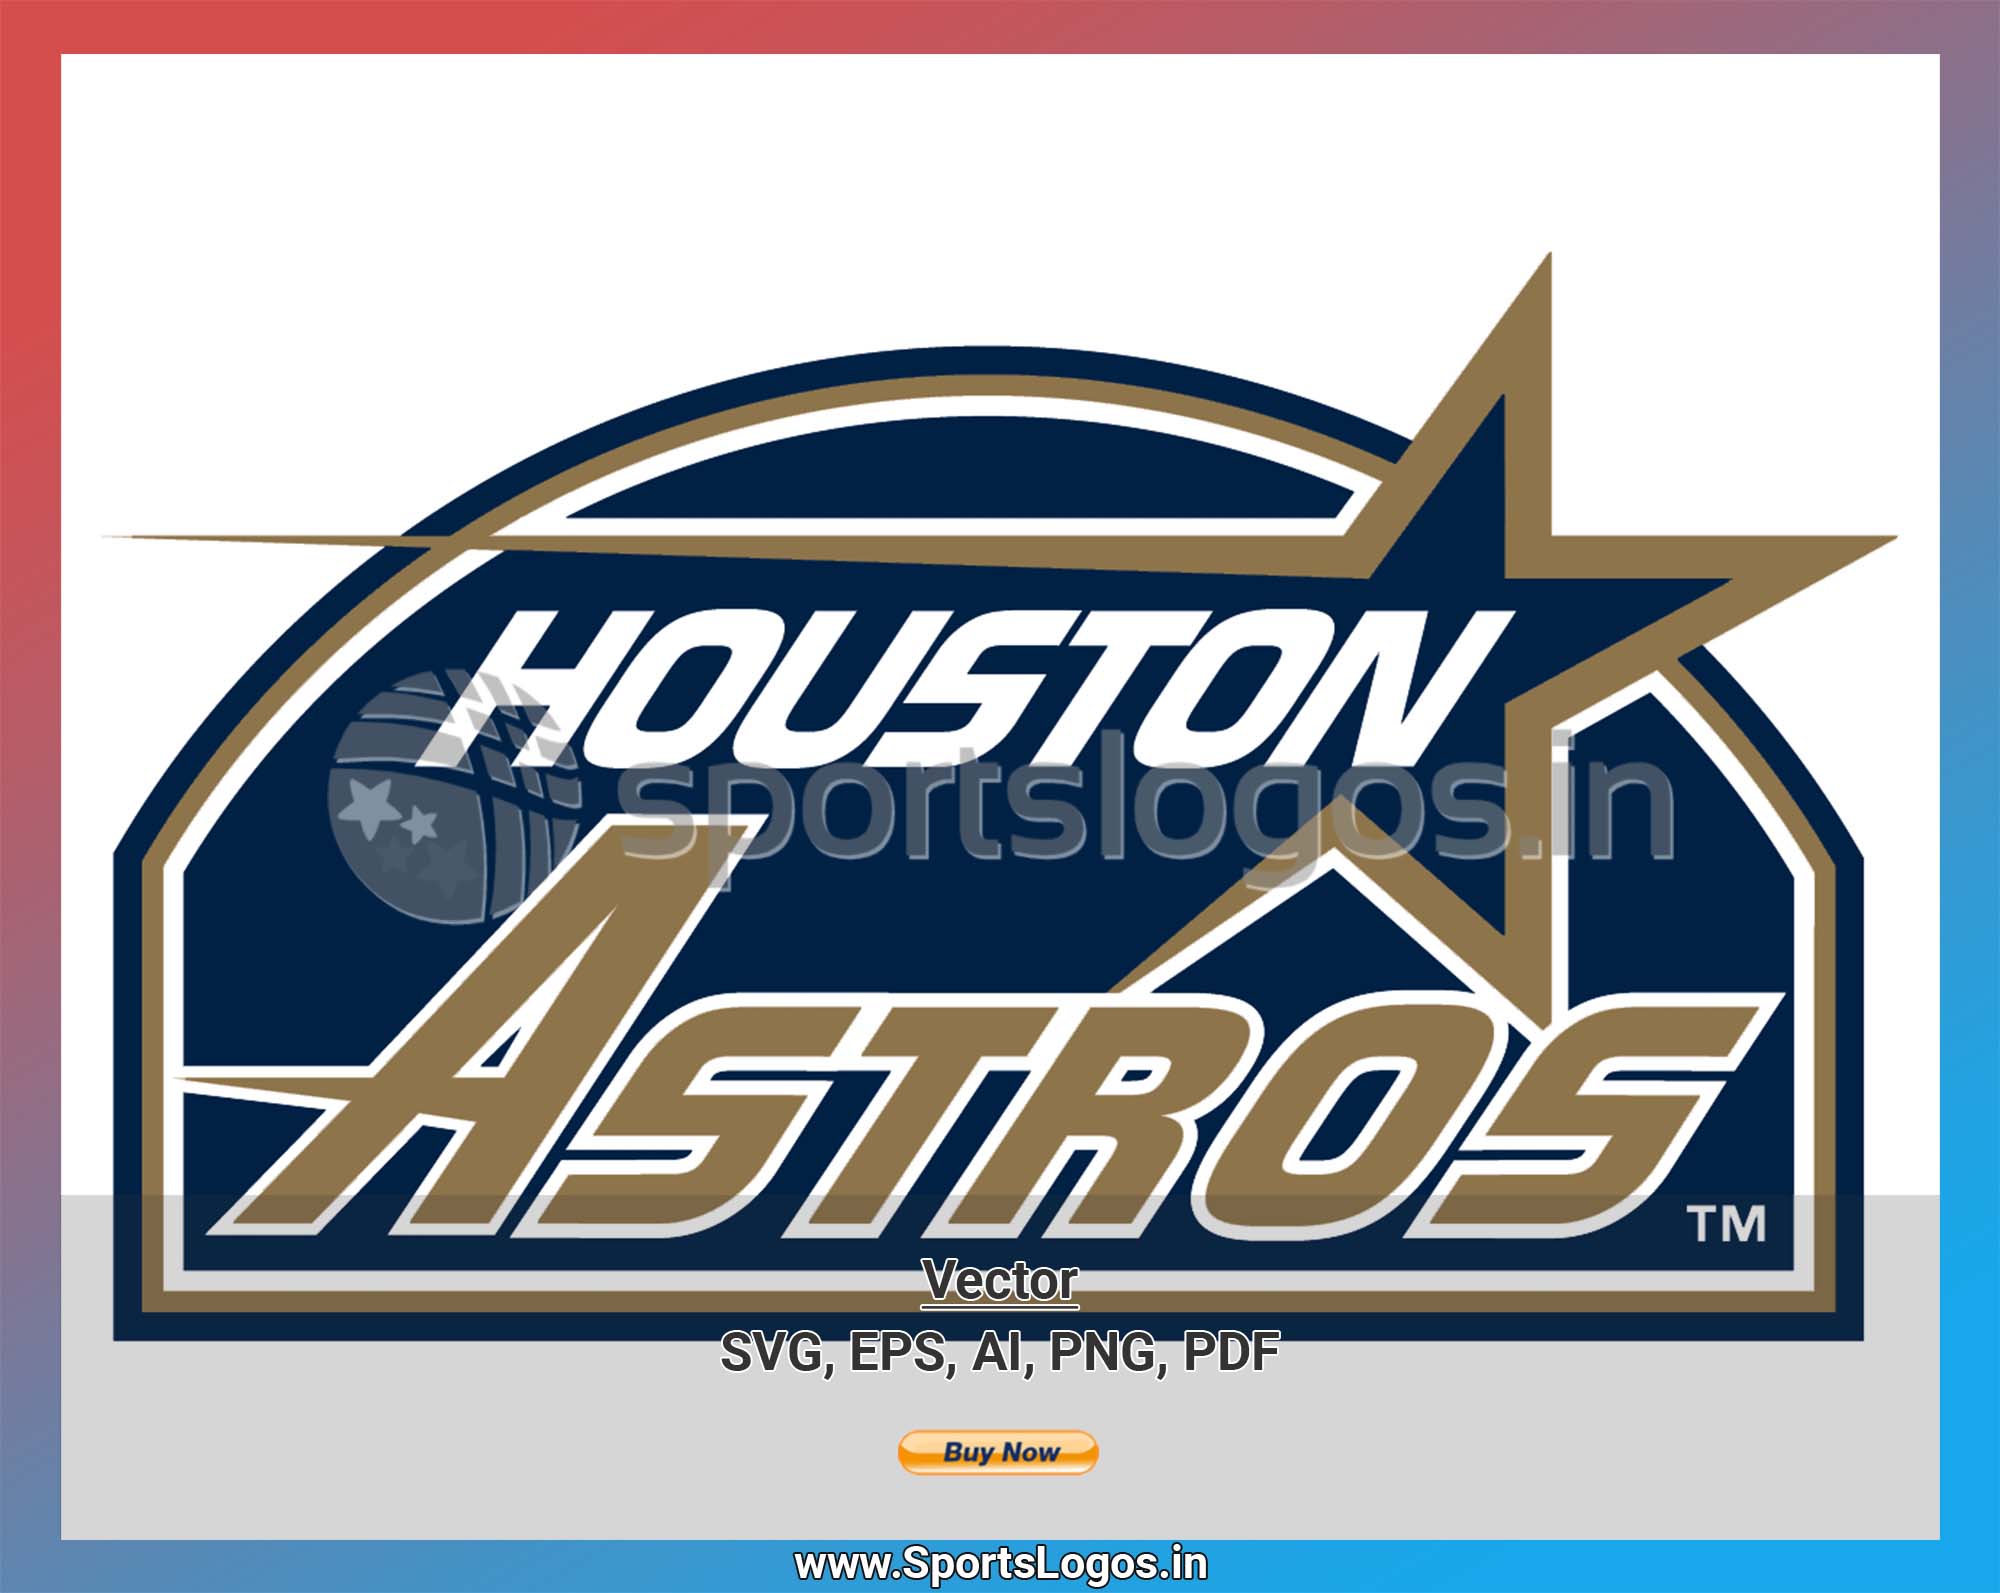 Houston Astros Logo editorial stock image. Illustration of famous -  136091324